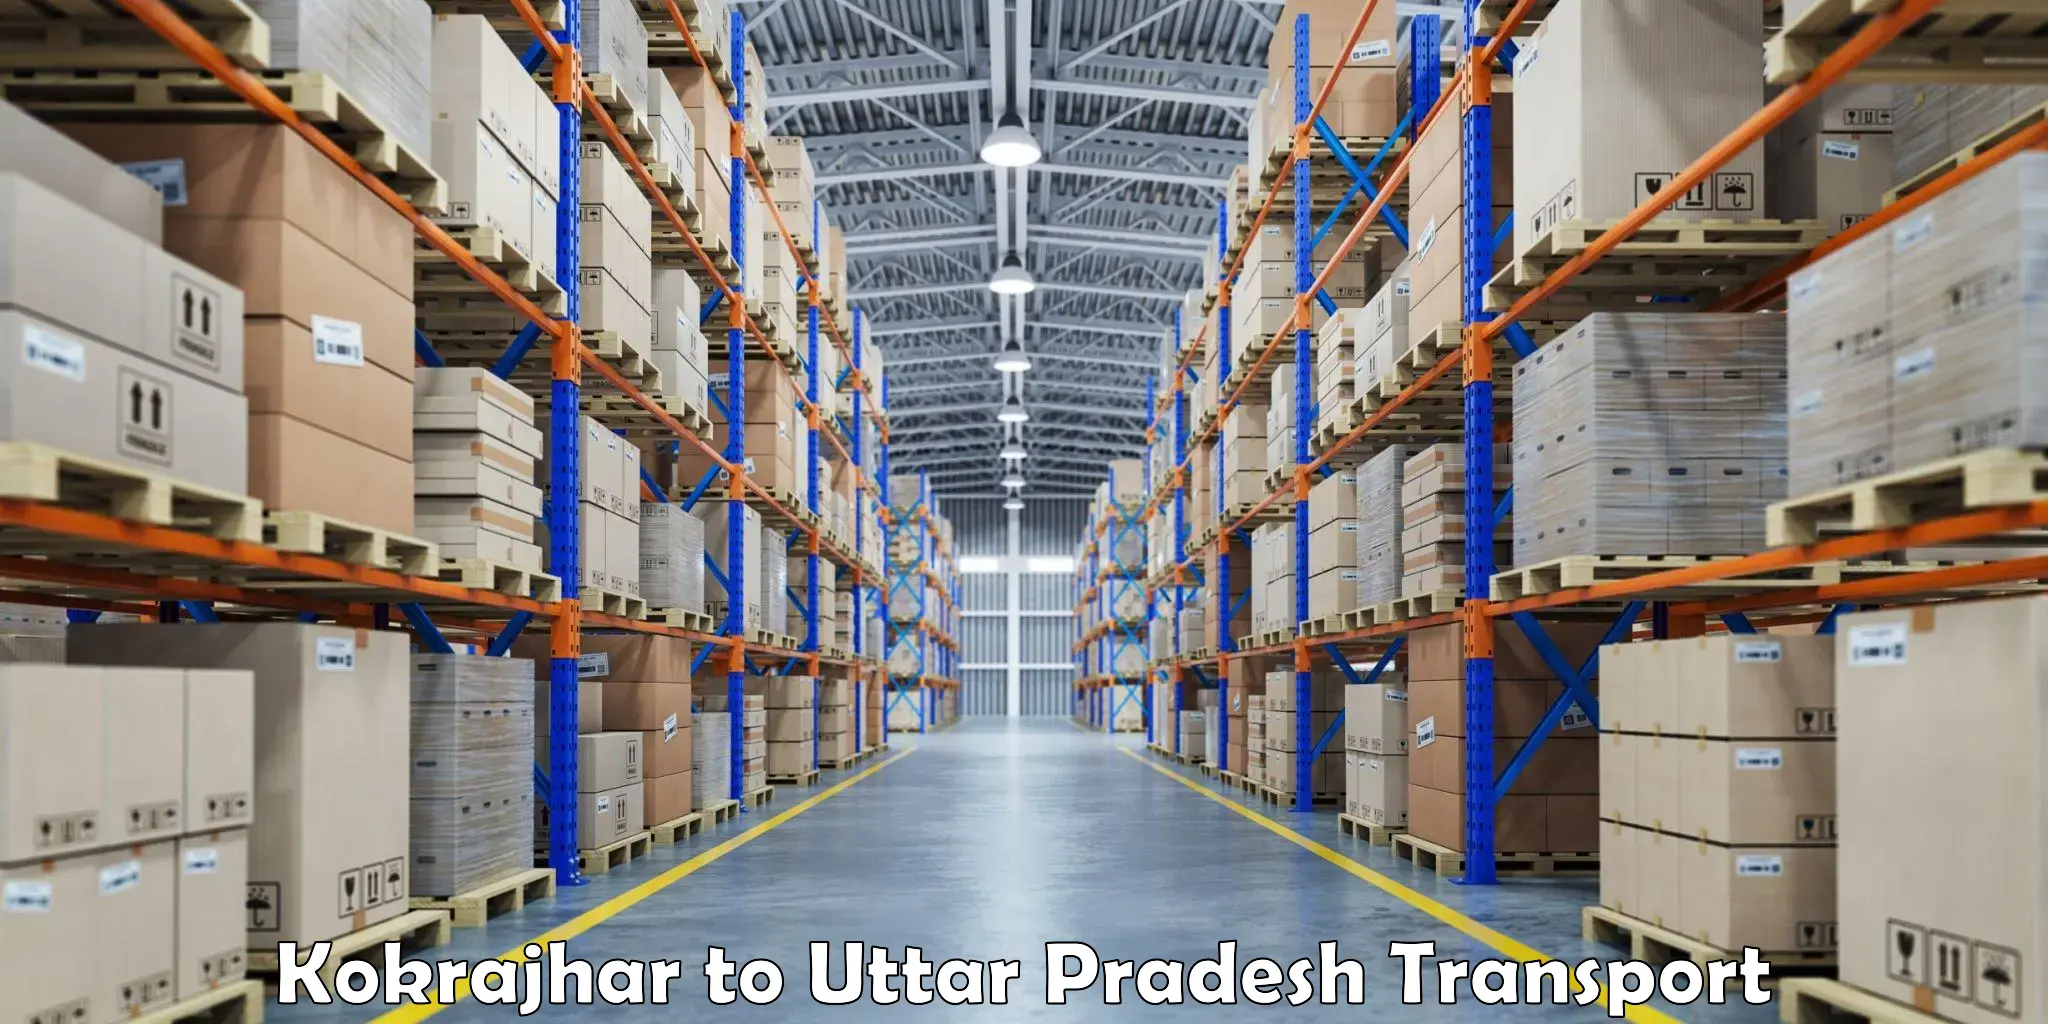 Shipping partner Kokrajhar to Faridpur